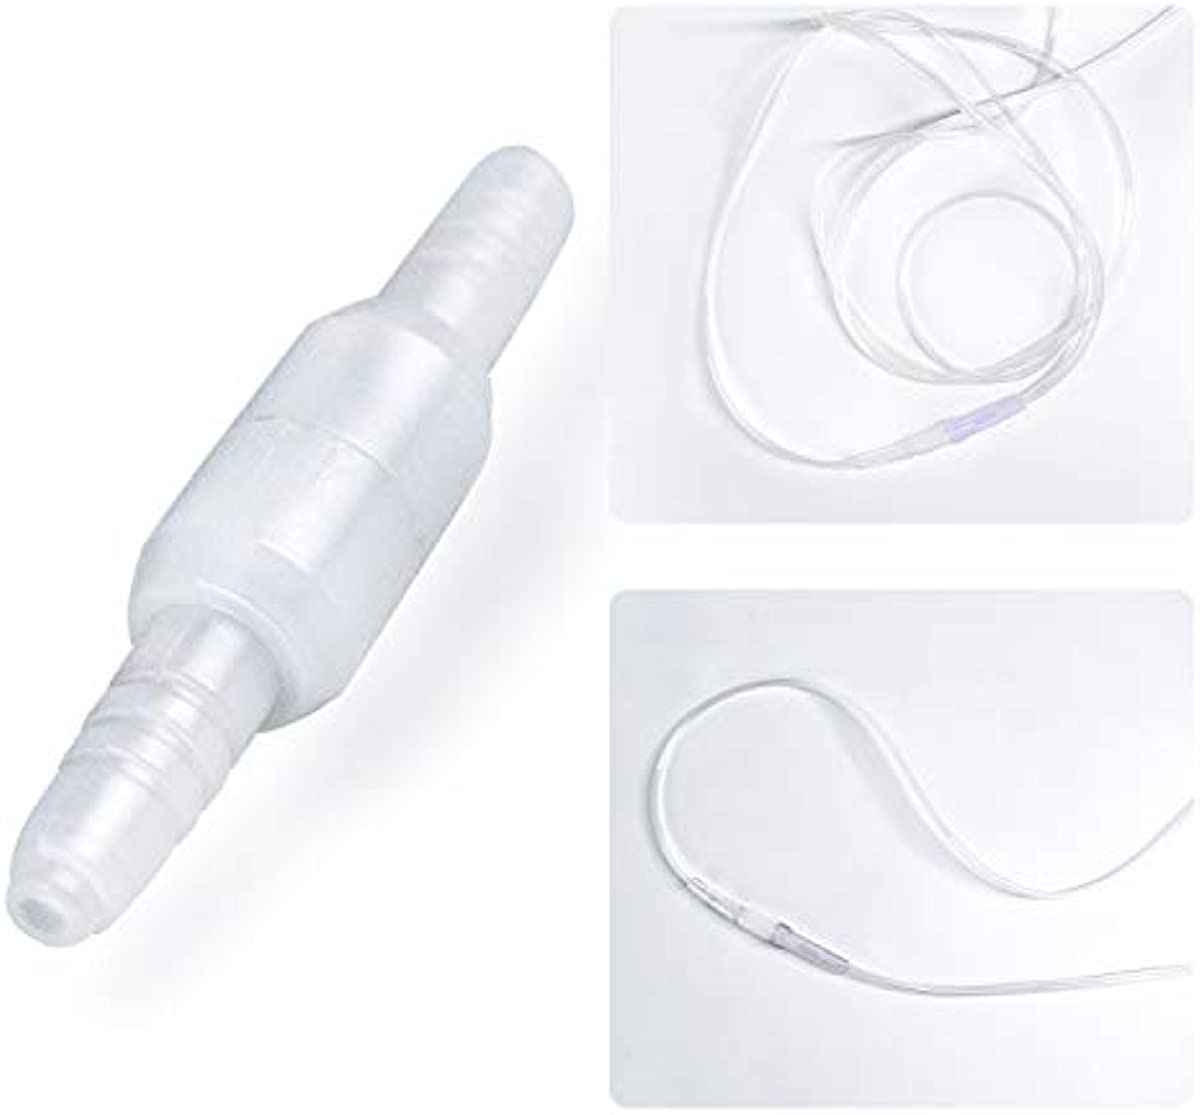 5Packs Oxygen Tubing Swivel Connector for Oxygen Tubing, Swivel Oxygen Tubing Connector, Avoid Tangling of Tube